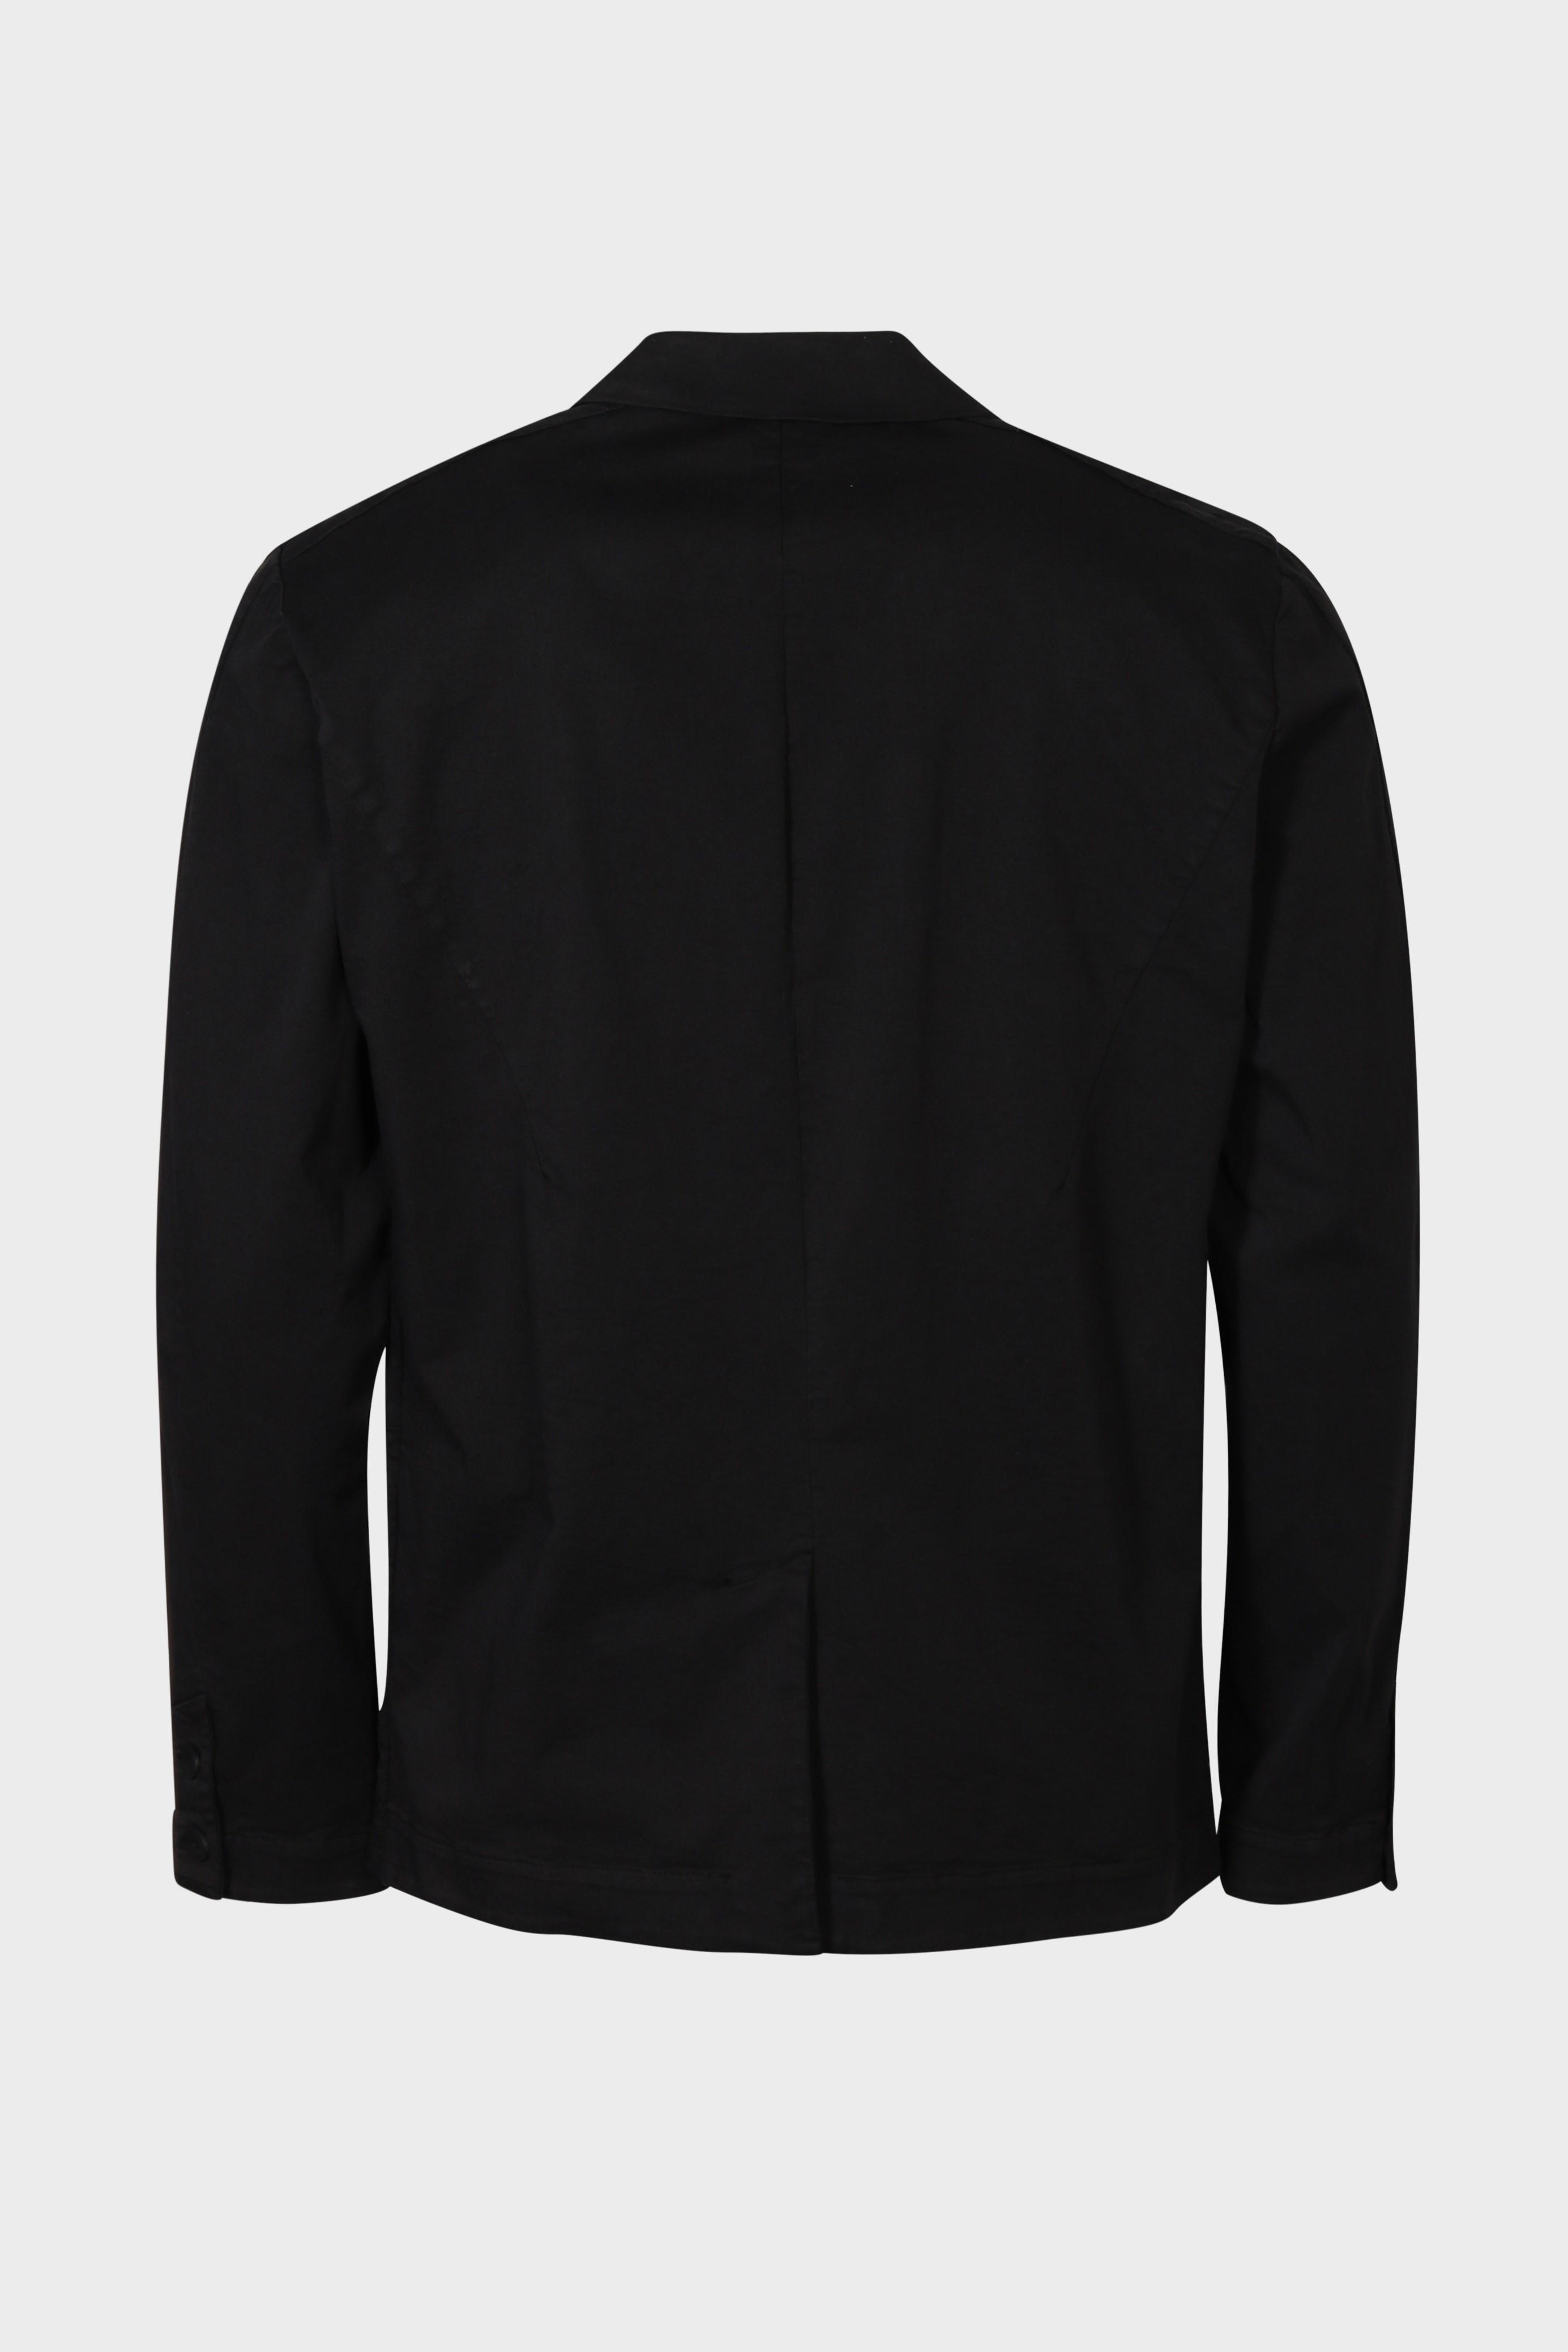 TRANSIT UOMO Cotton/Linen Jacket in Black XXL